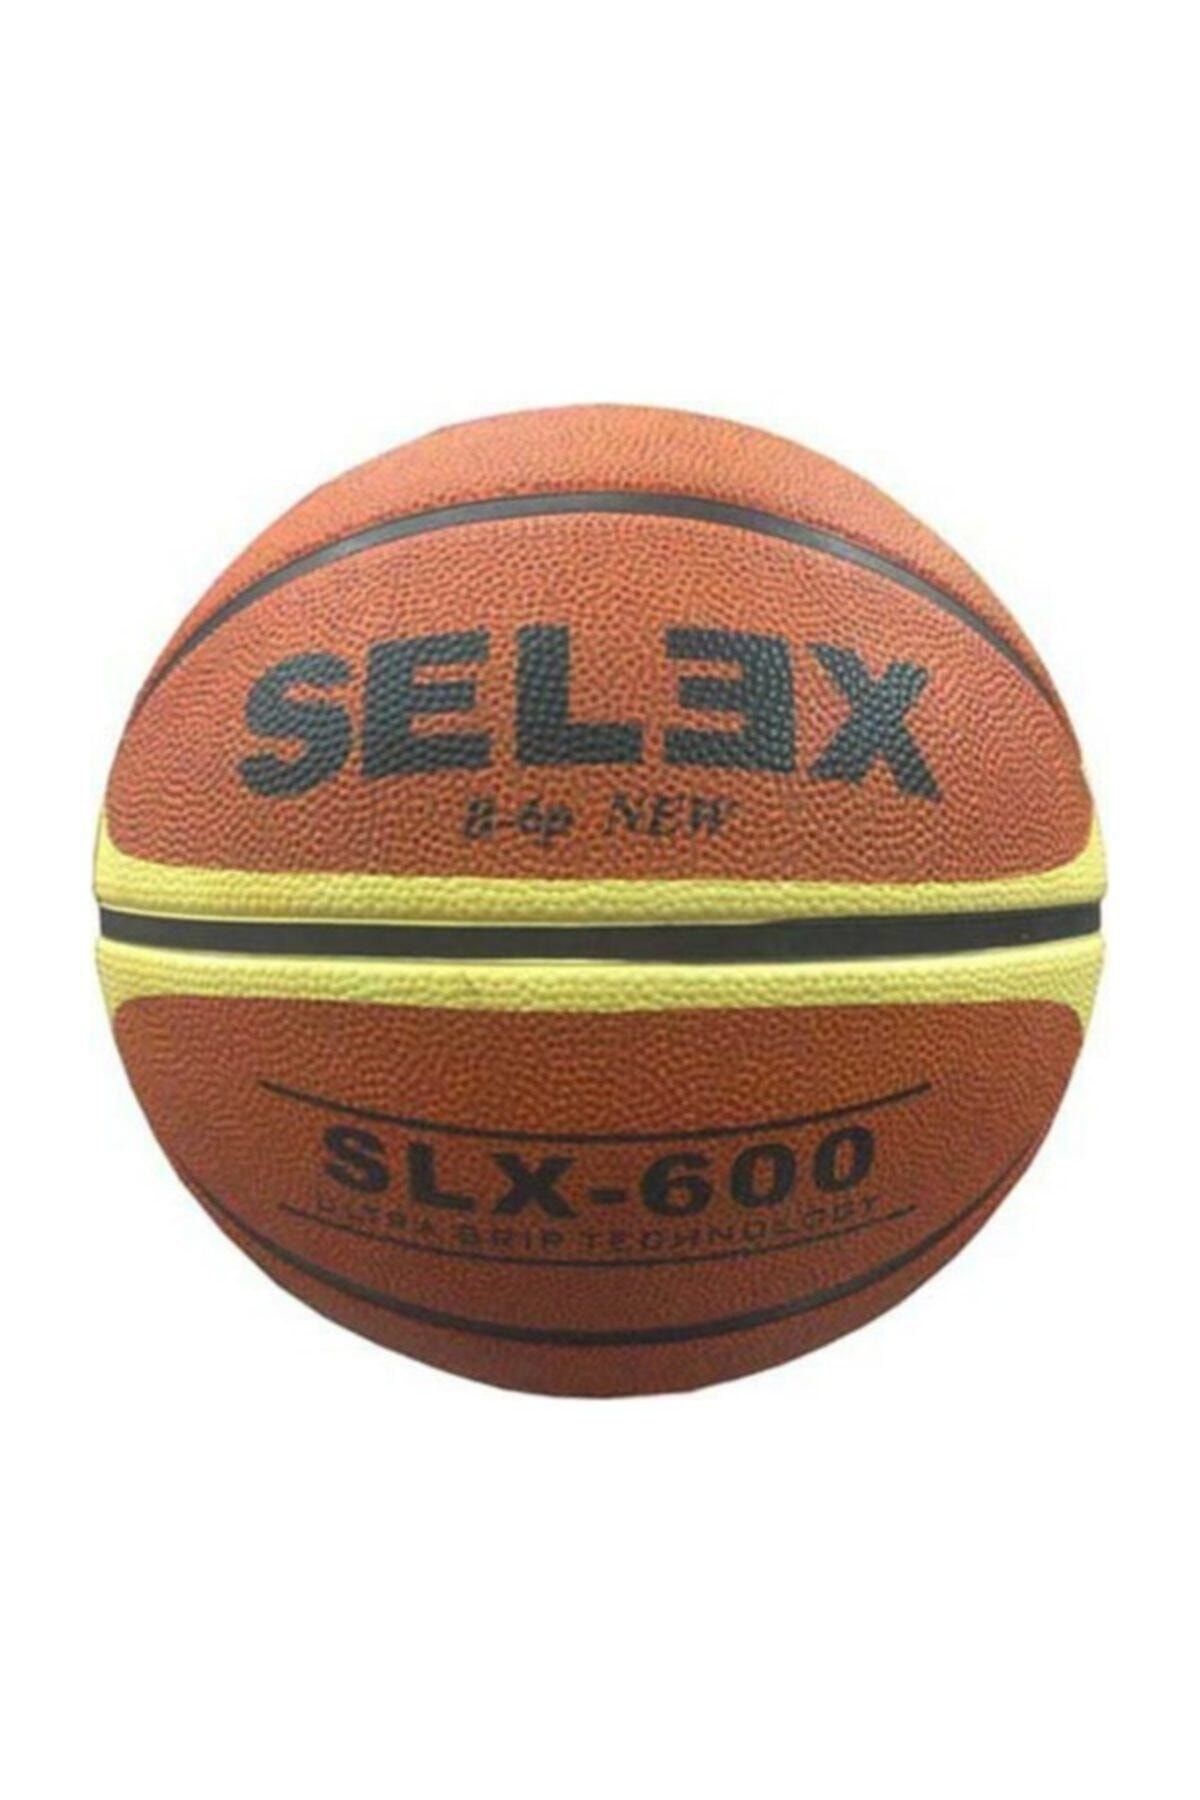 SELEX Slx-600 Basketbol Topu